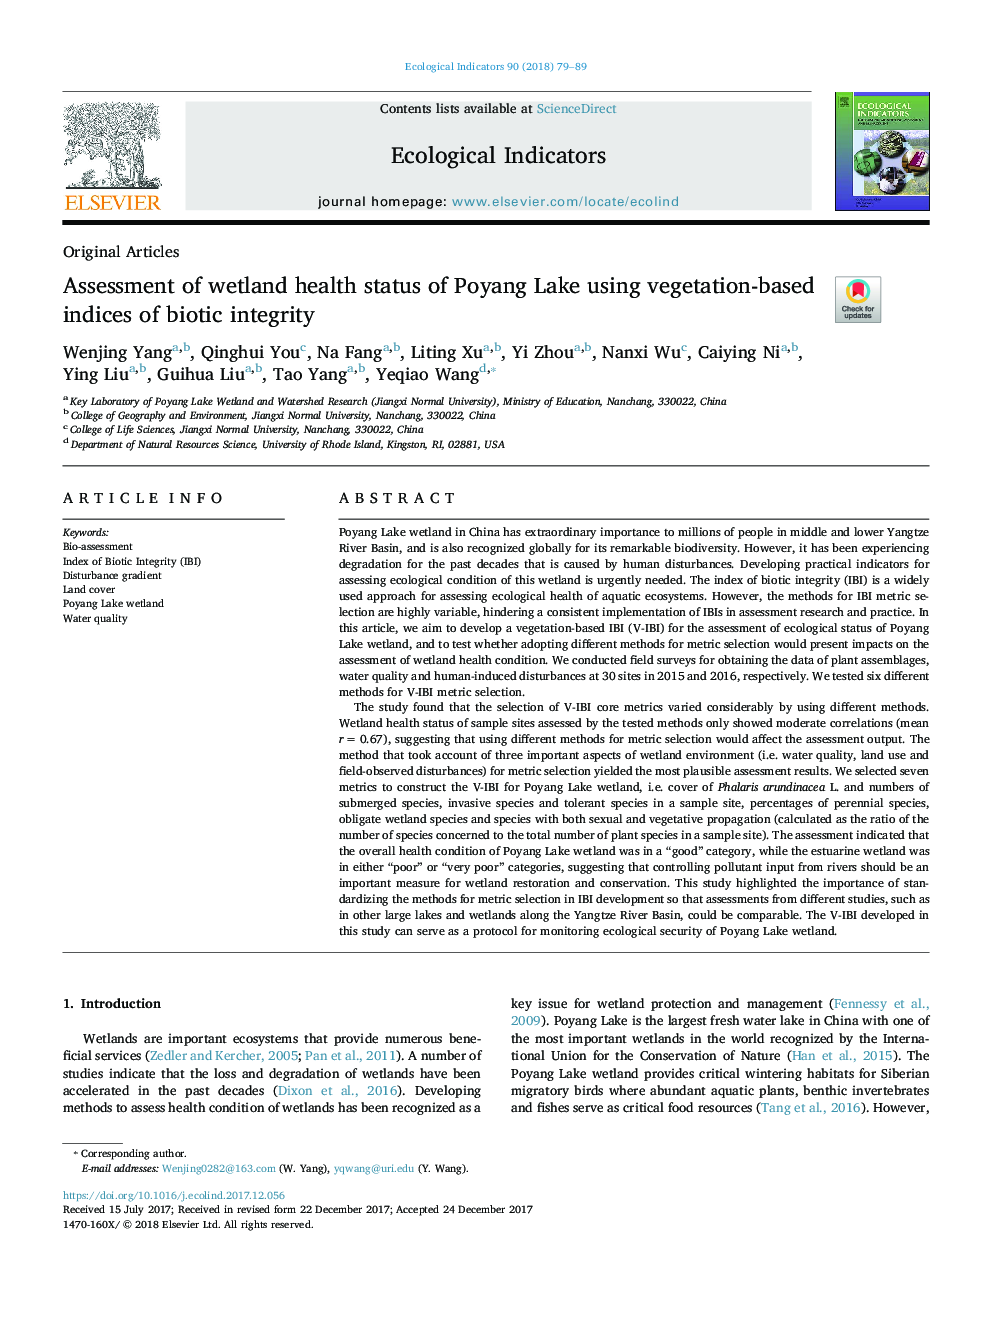 Assessment of wetland health status of Poyang Lake using vegetation-based indices of biotic integrity